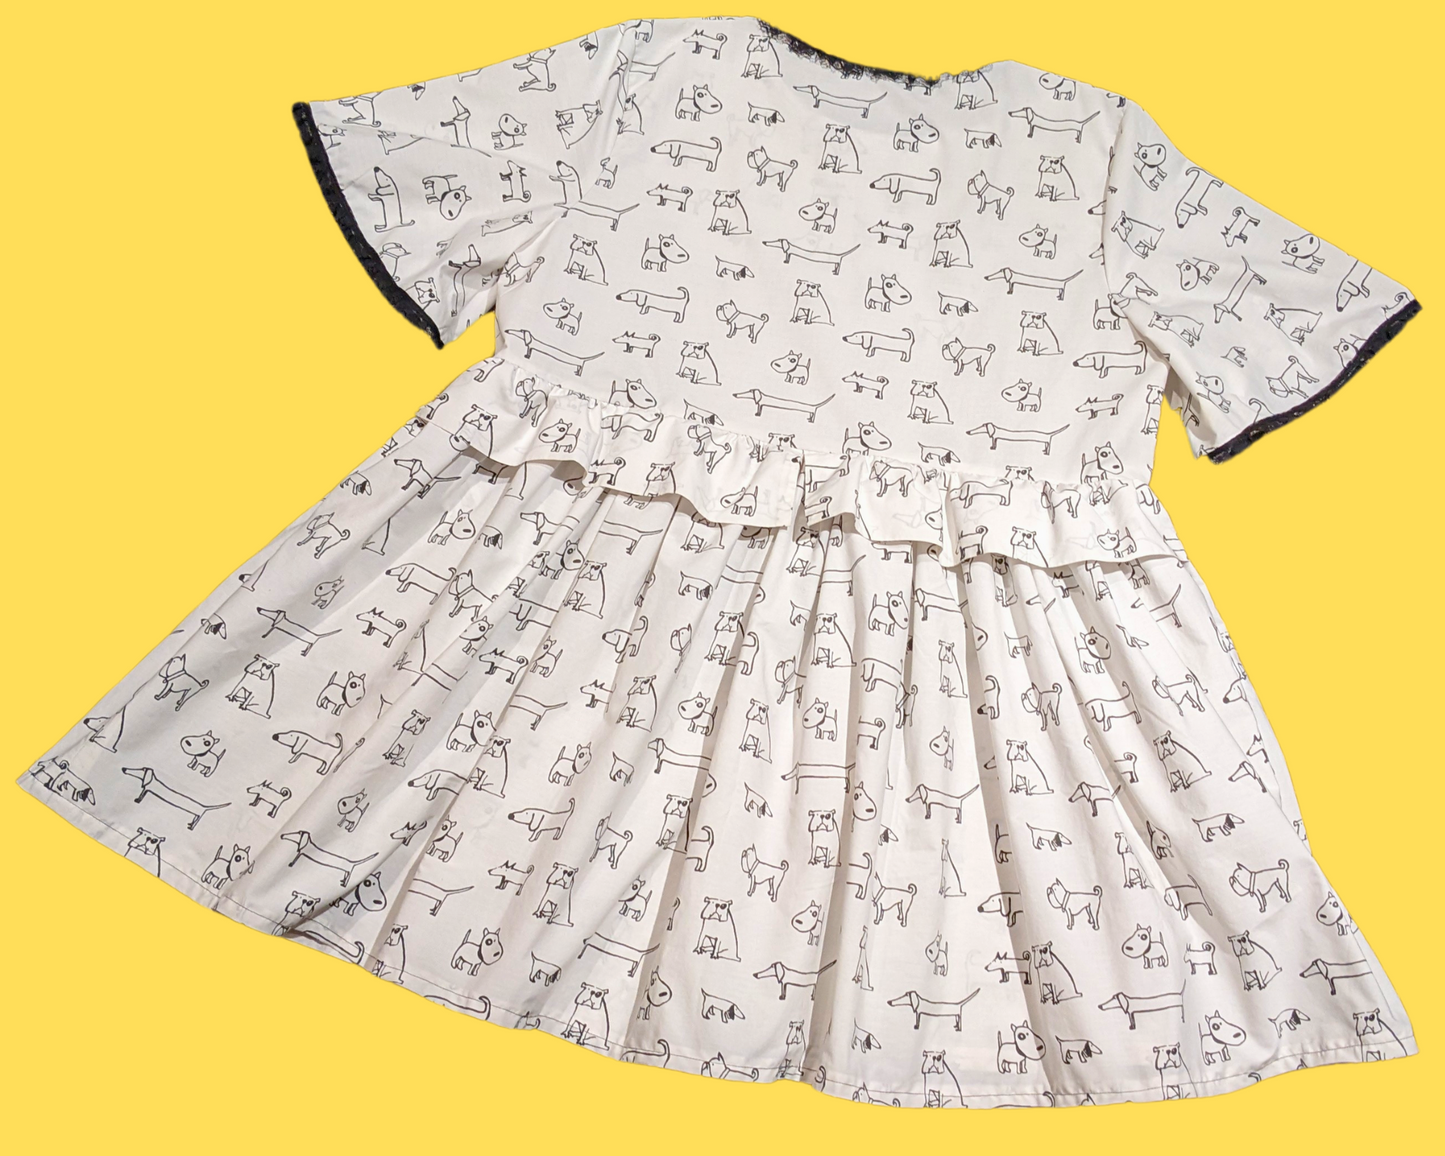 Handmade, Upcycled Dog Doodles Bedsheet Dress Fits Size 2XL